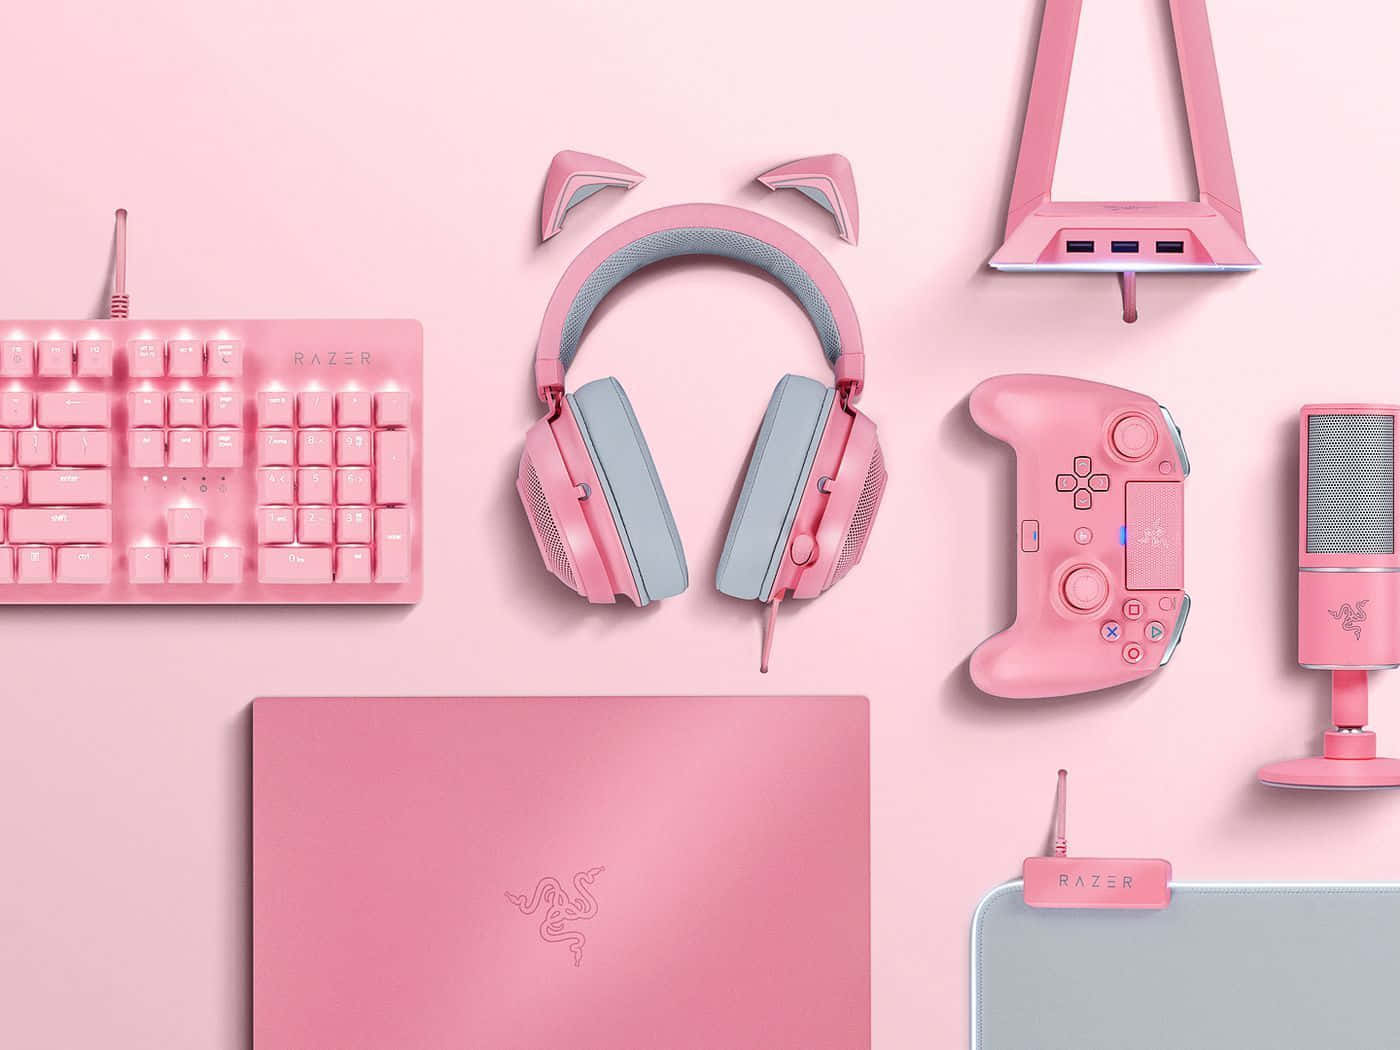 Download Razer Pink Gaming Accessories | Wallpapers.com